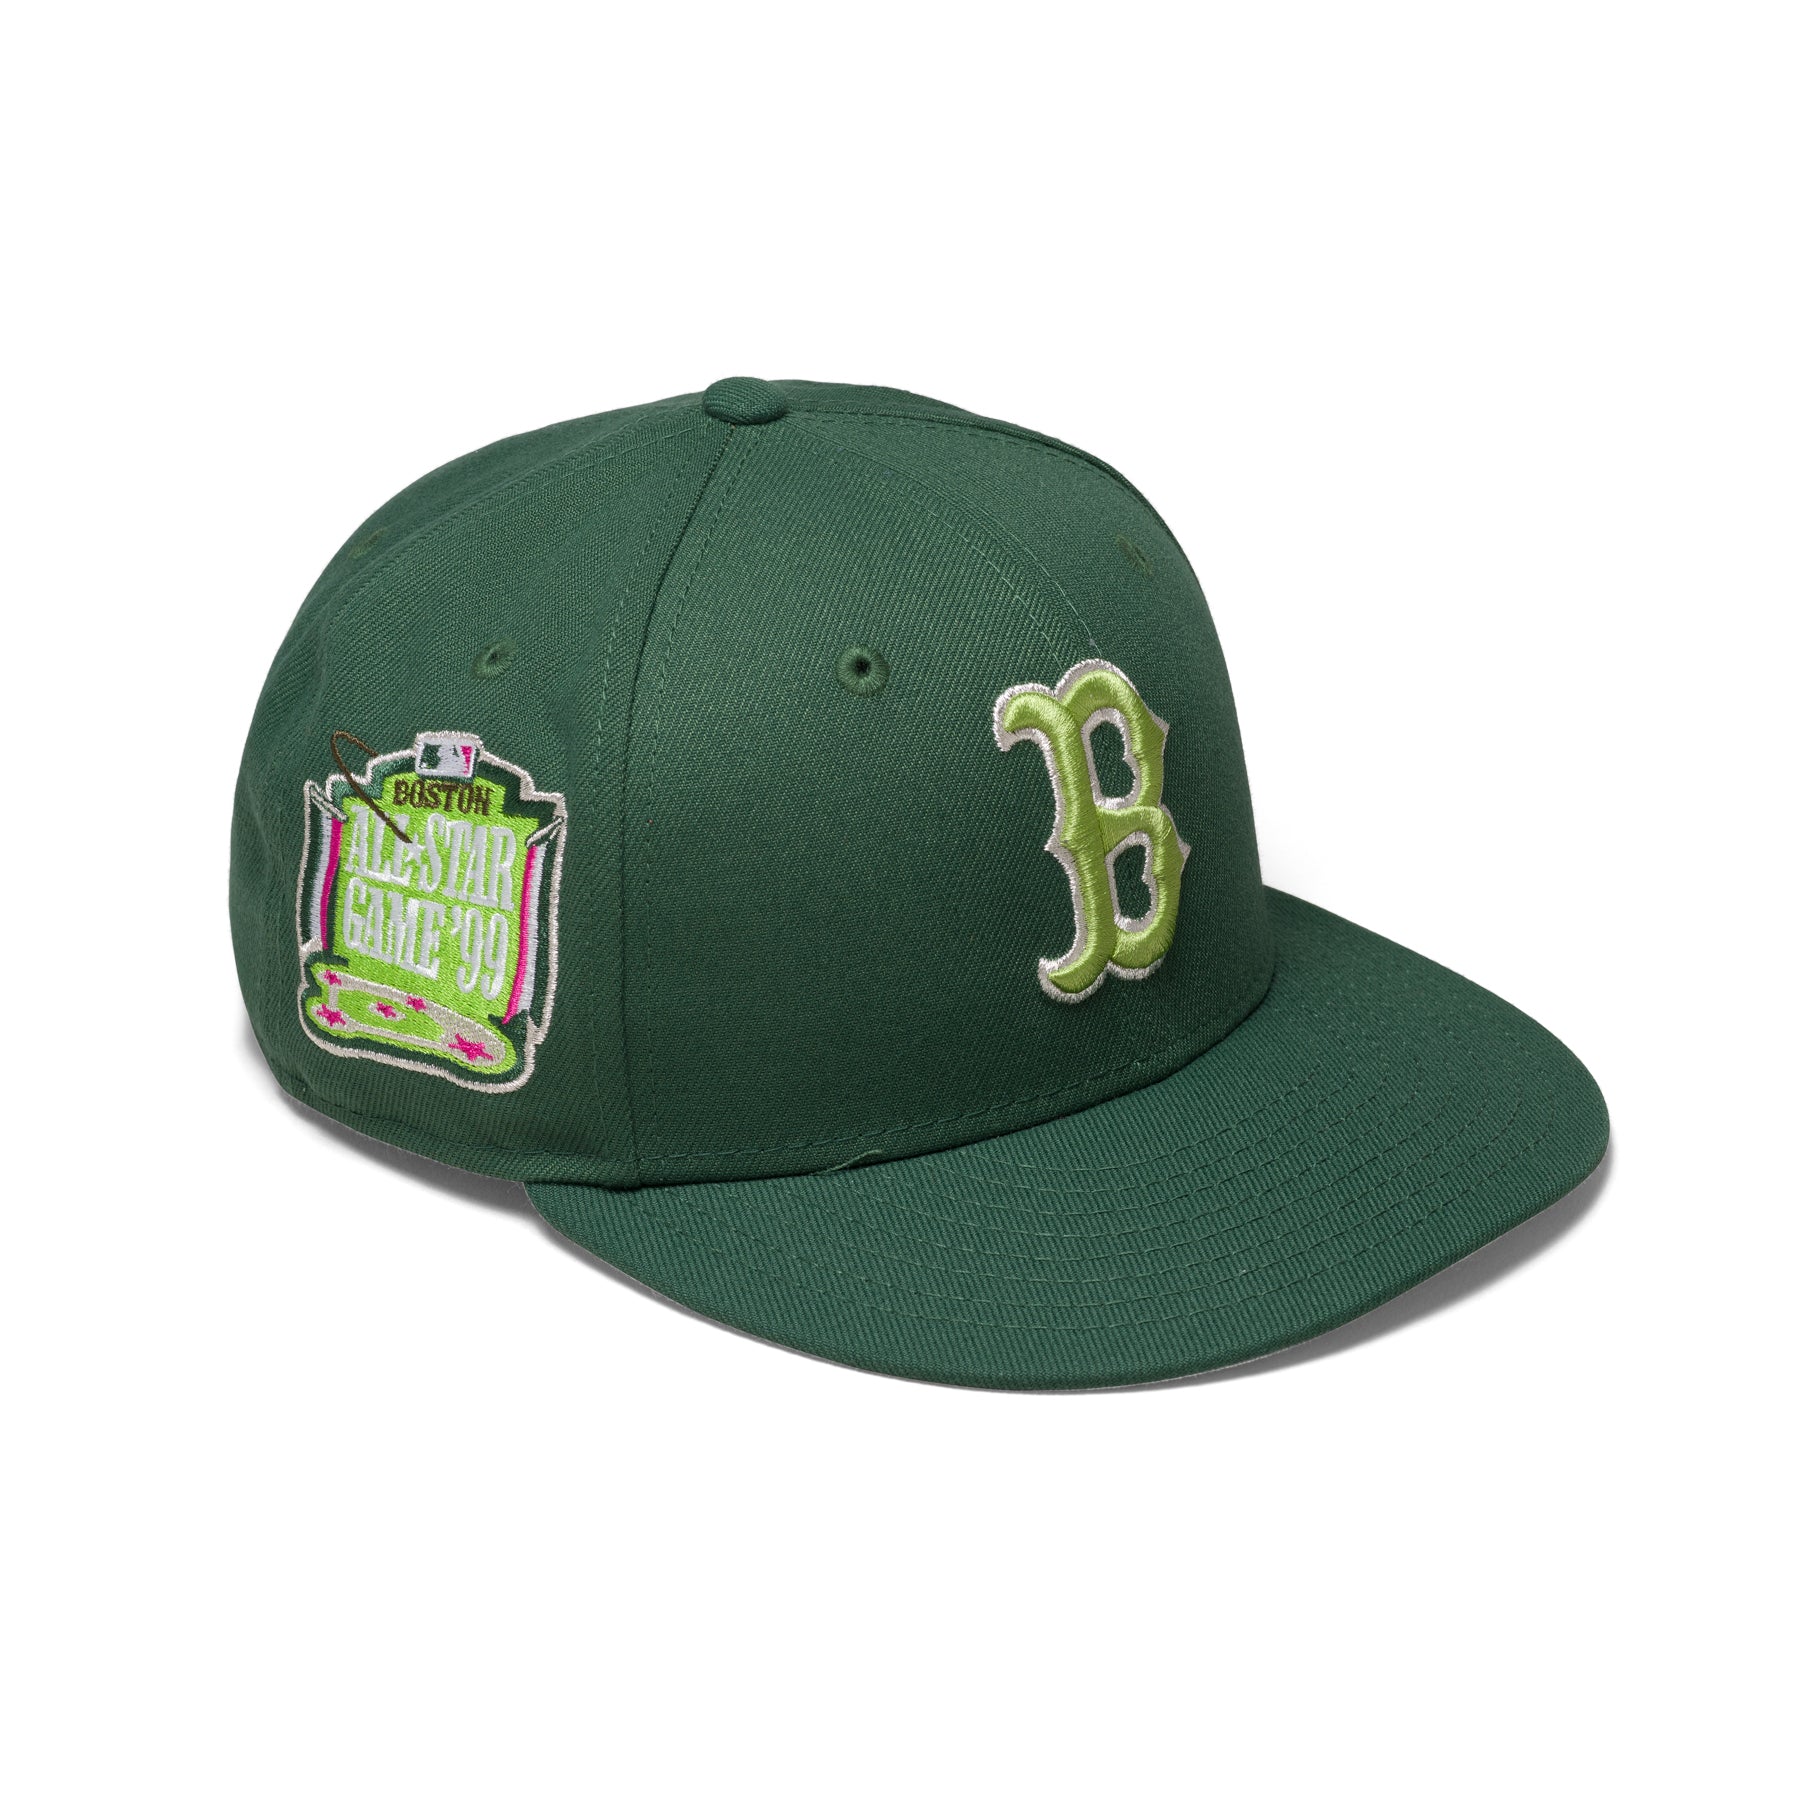 Vintage Logo 7 1999 MLB Boston all star game￼ ‘99 Cap